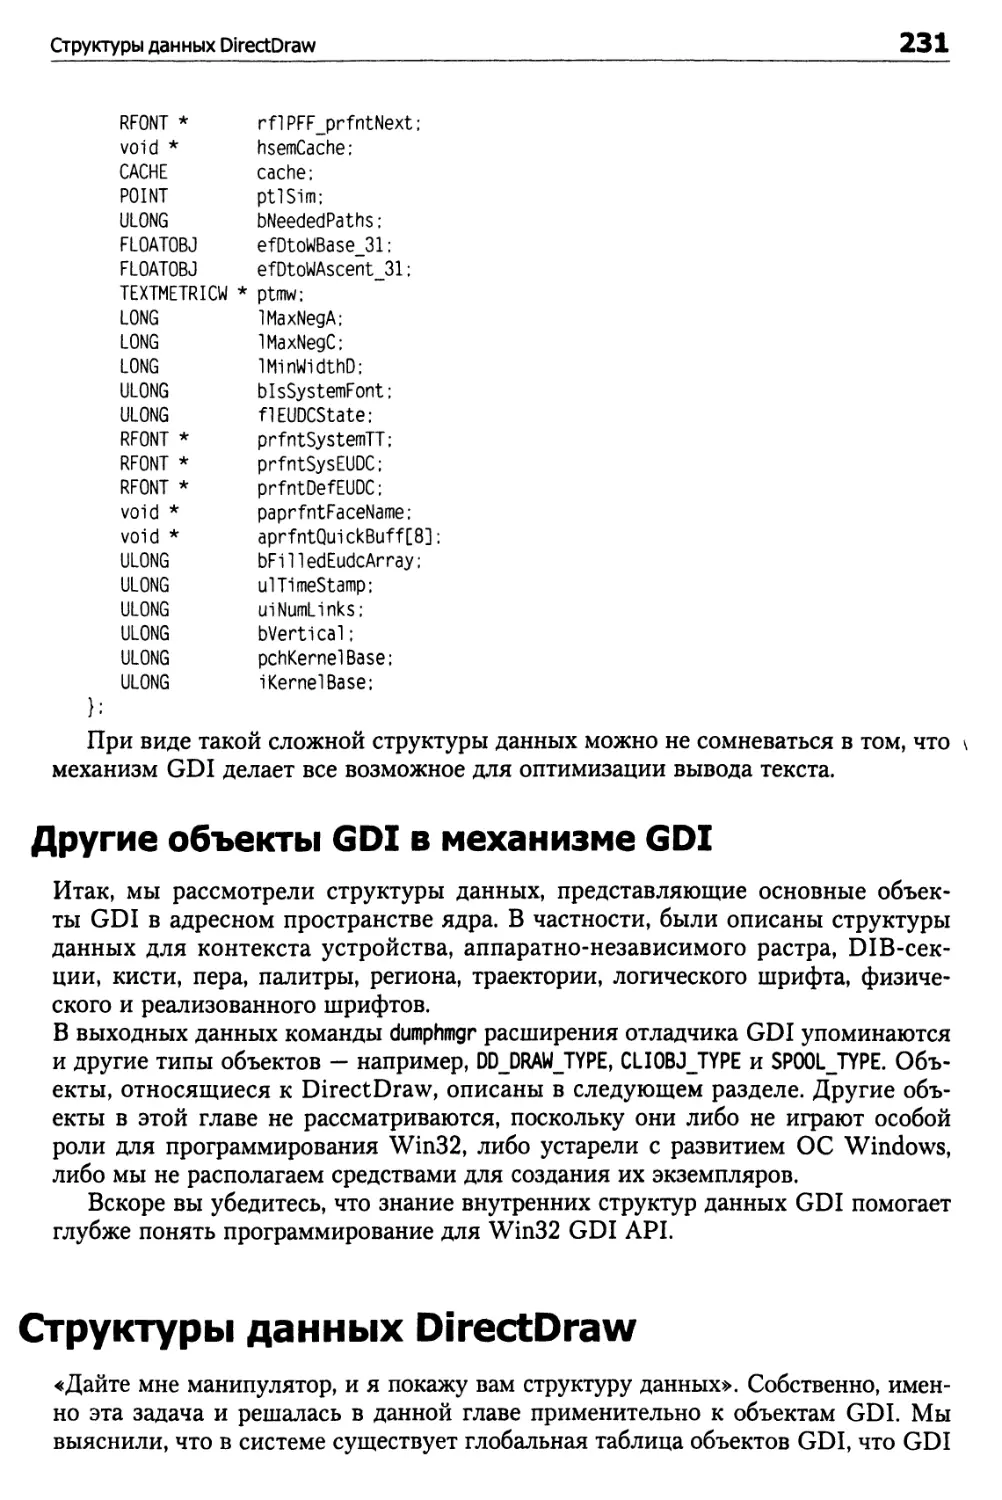 Другие объекты GDI в механизме GDI
Структуры данных DirectDraw